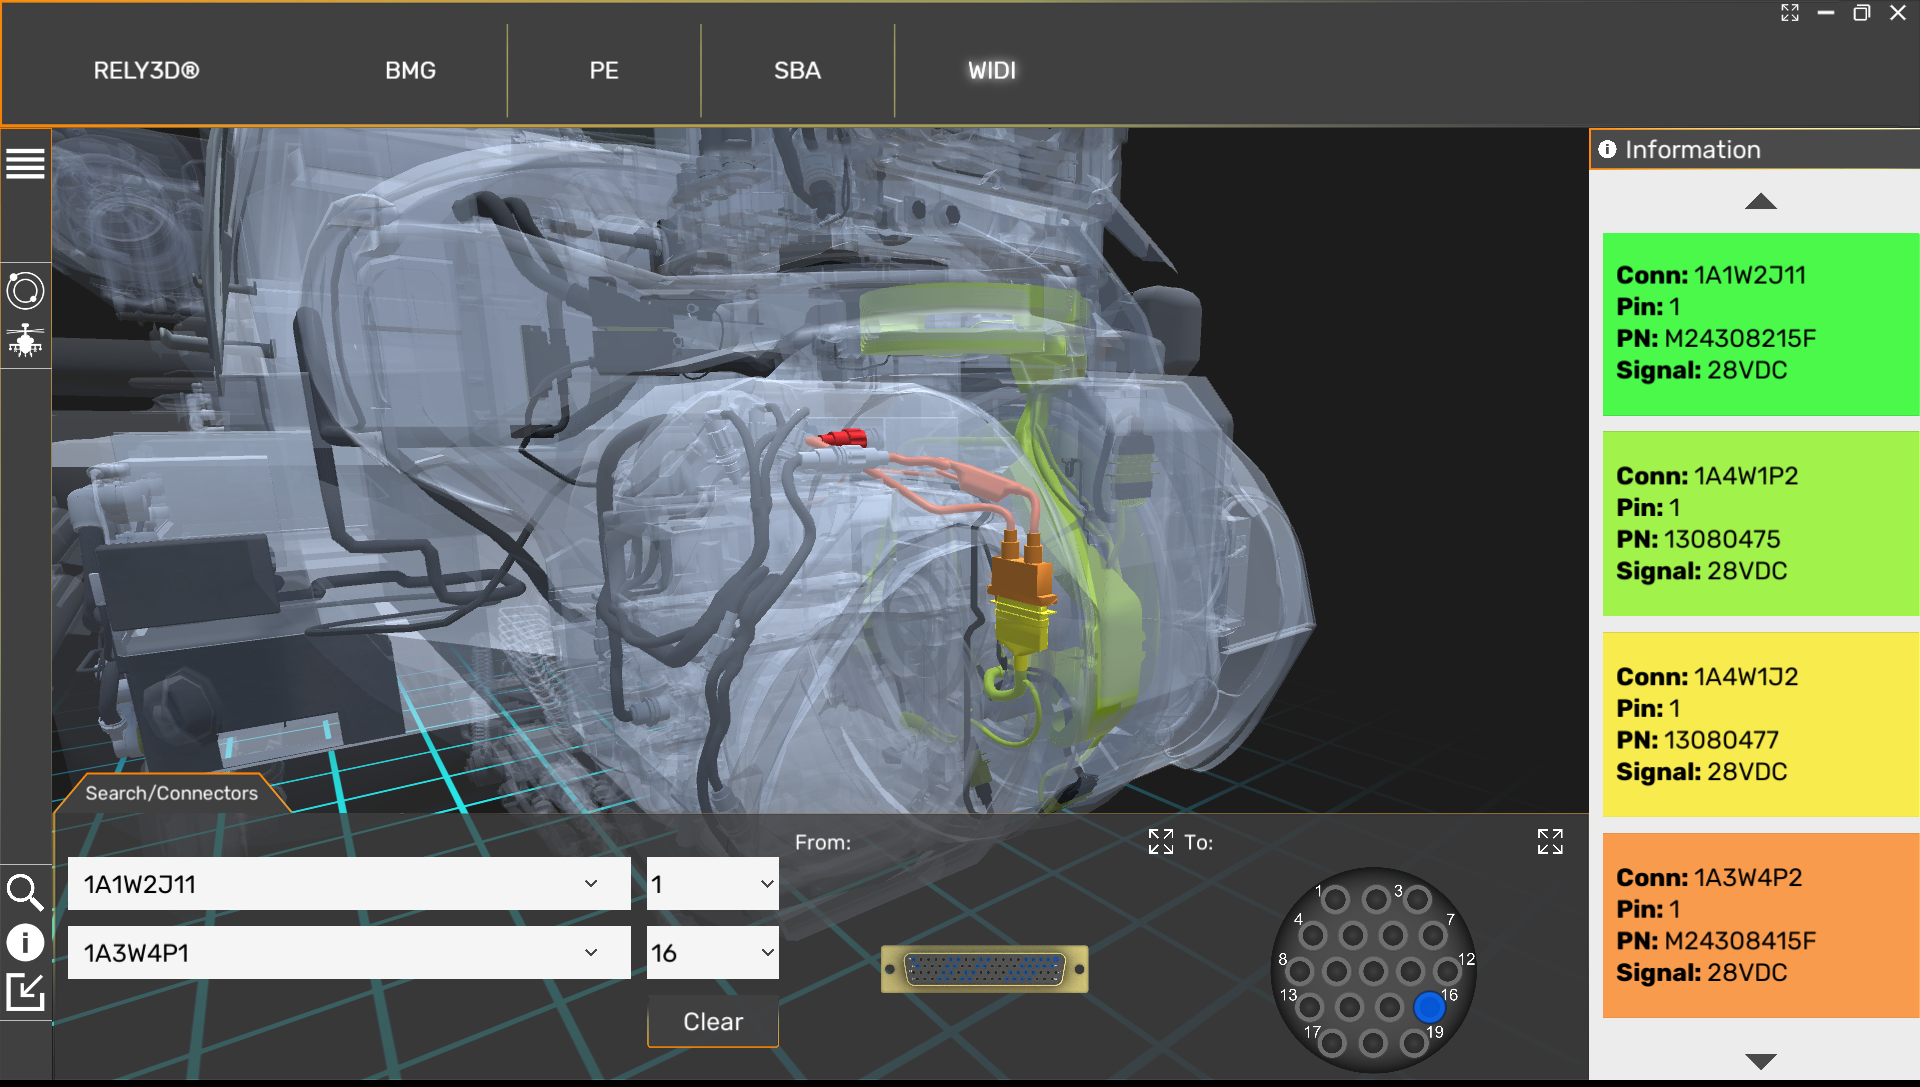 Lockheed Martin Develops Advanced Visualization Training Tool for Apache Flight Line Maintainers